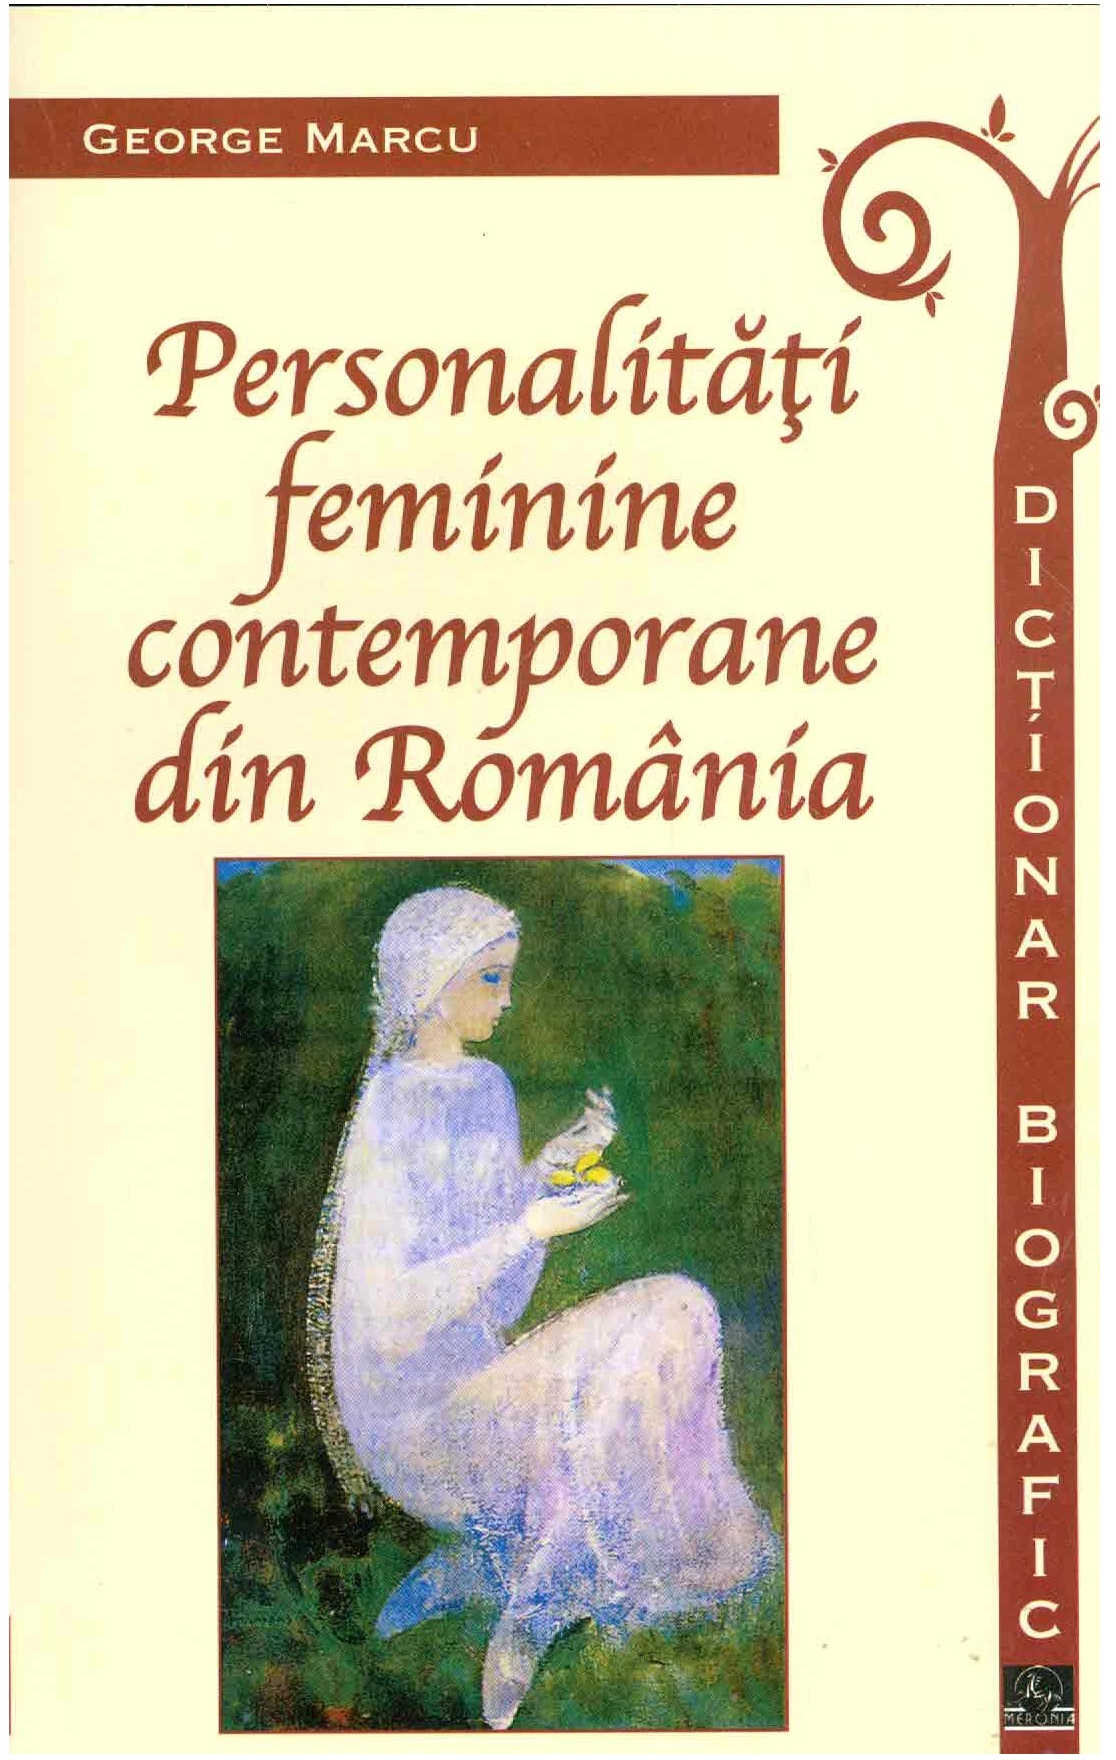 Personalitati feminine contemporane din Romania. Dictionar biografic | George Marcu biografic 2022